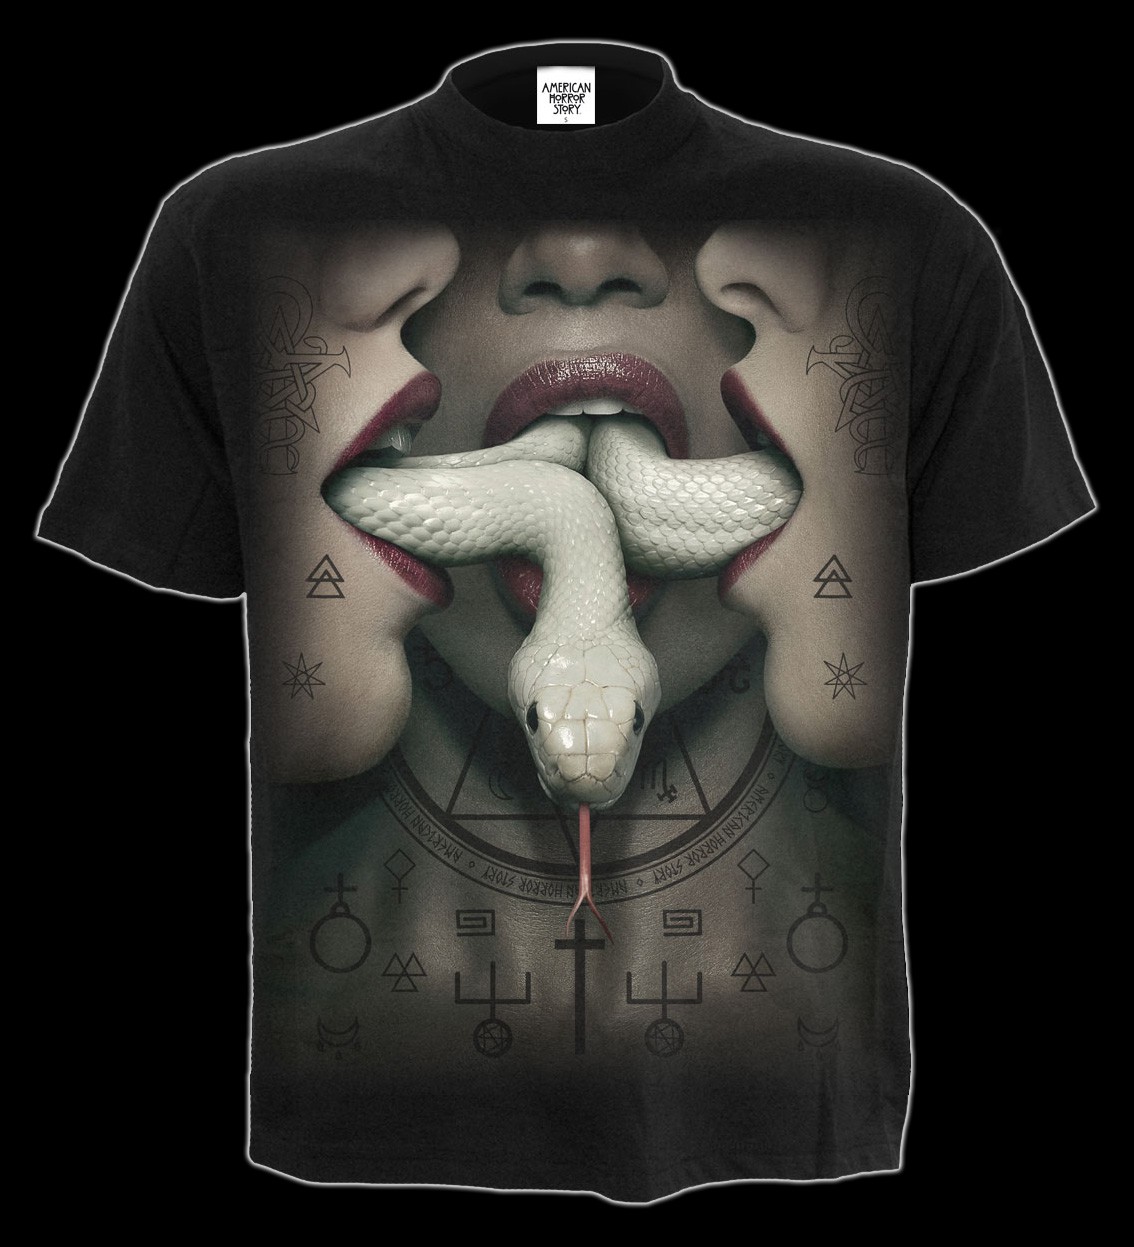 Coven Snakemouth - American Horror Story T-Shirt